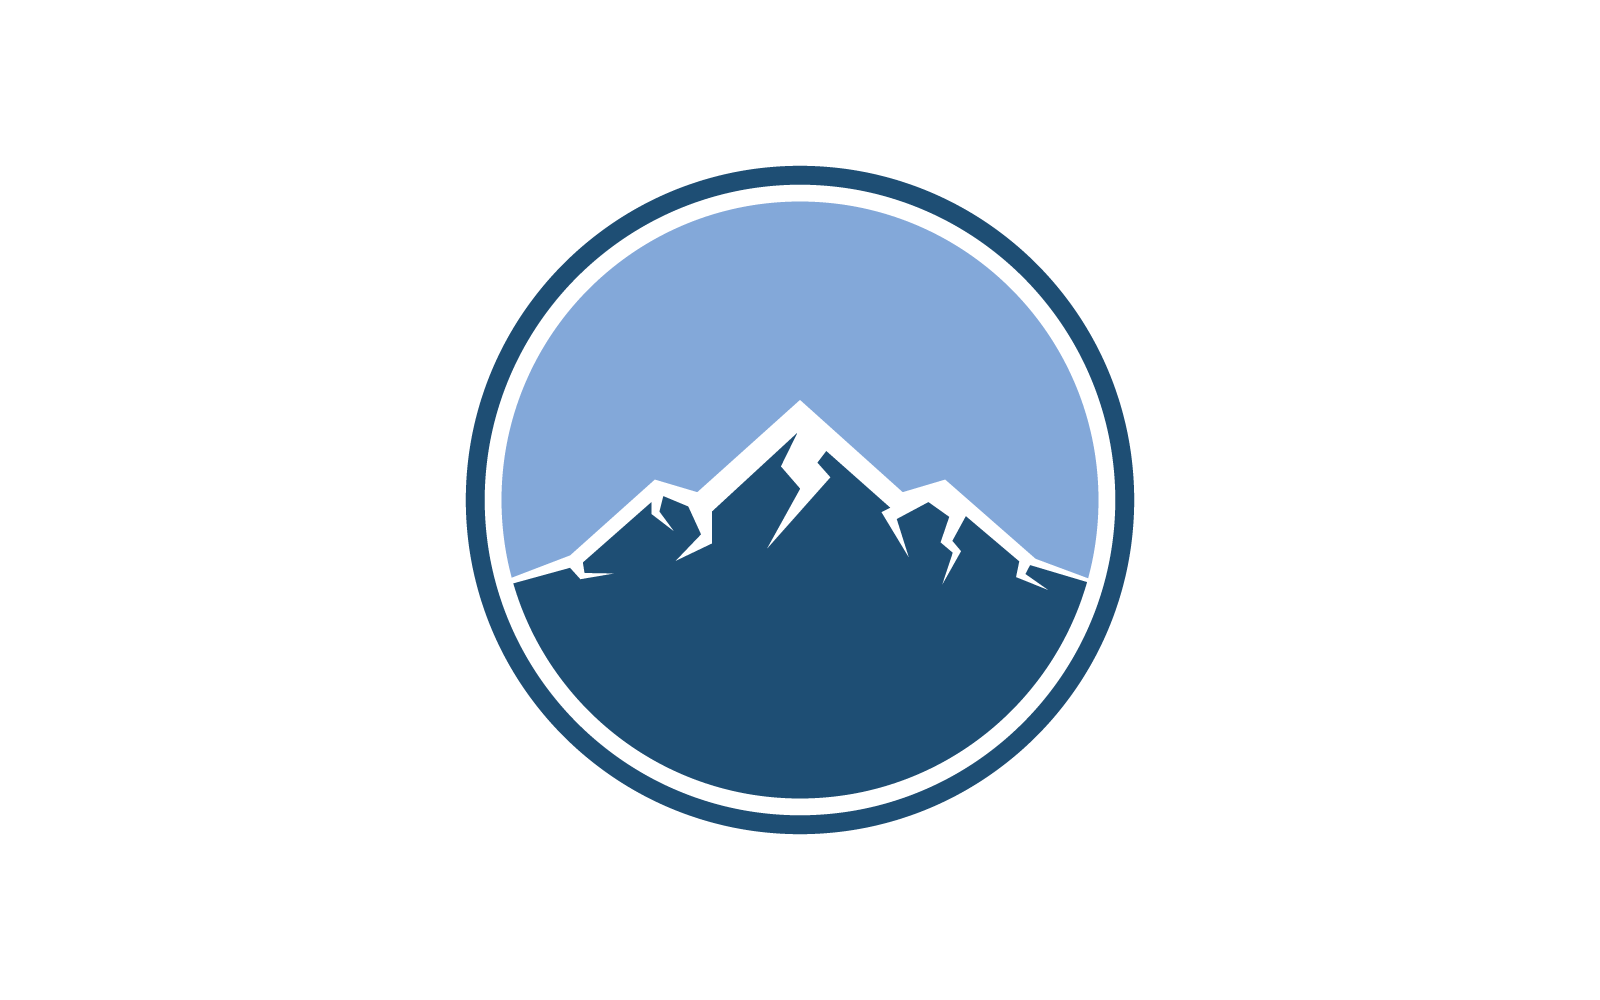 Mountain illustration logo vector template flat design